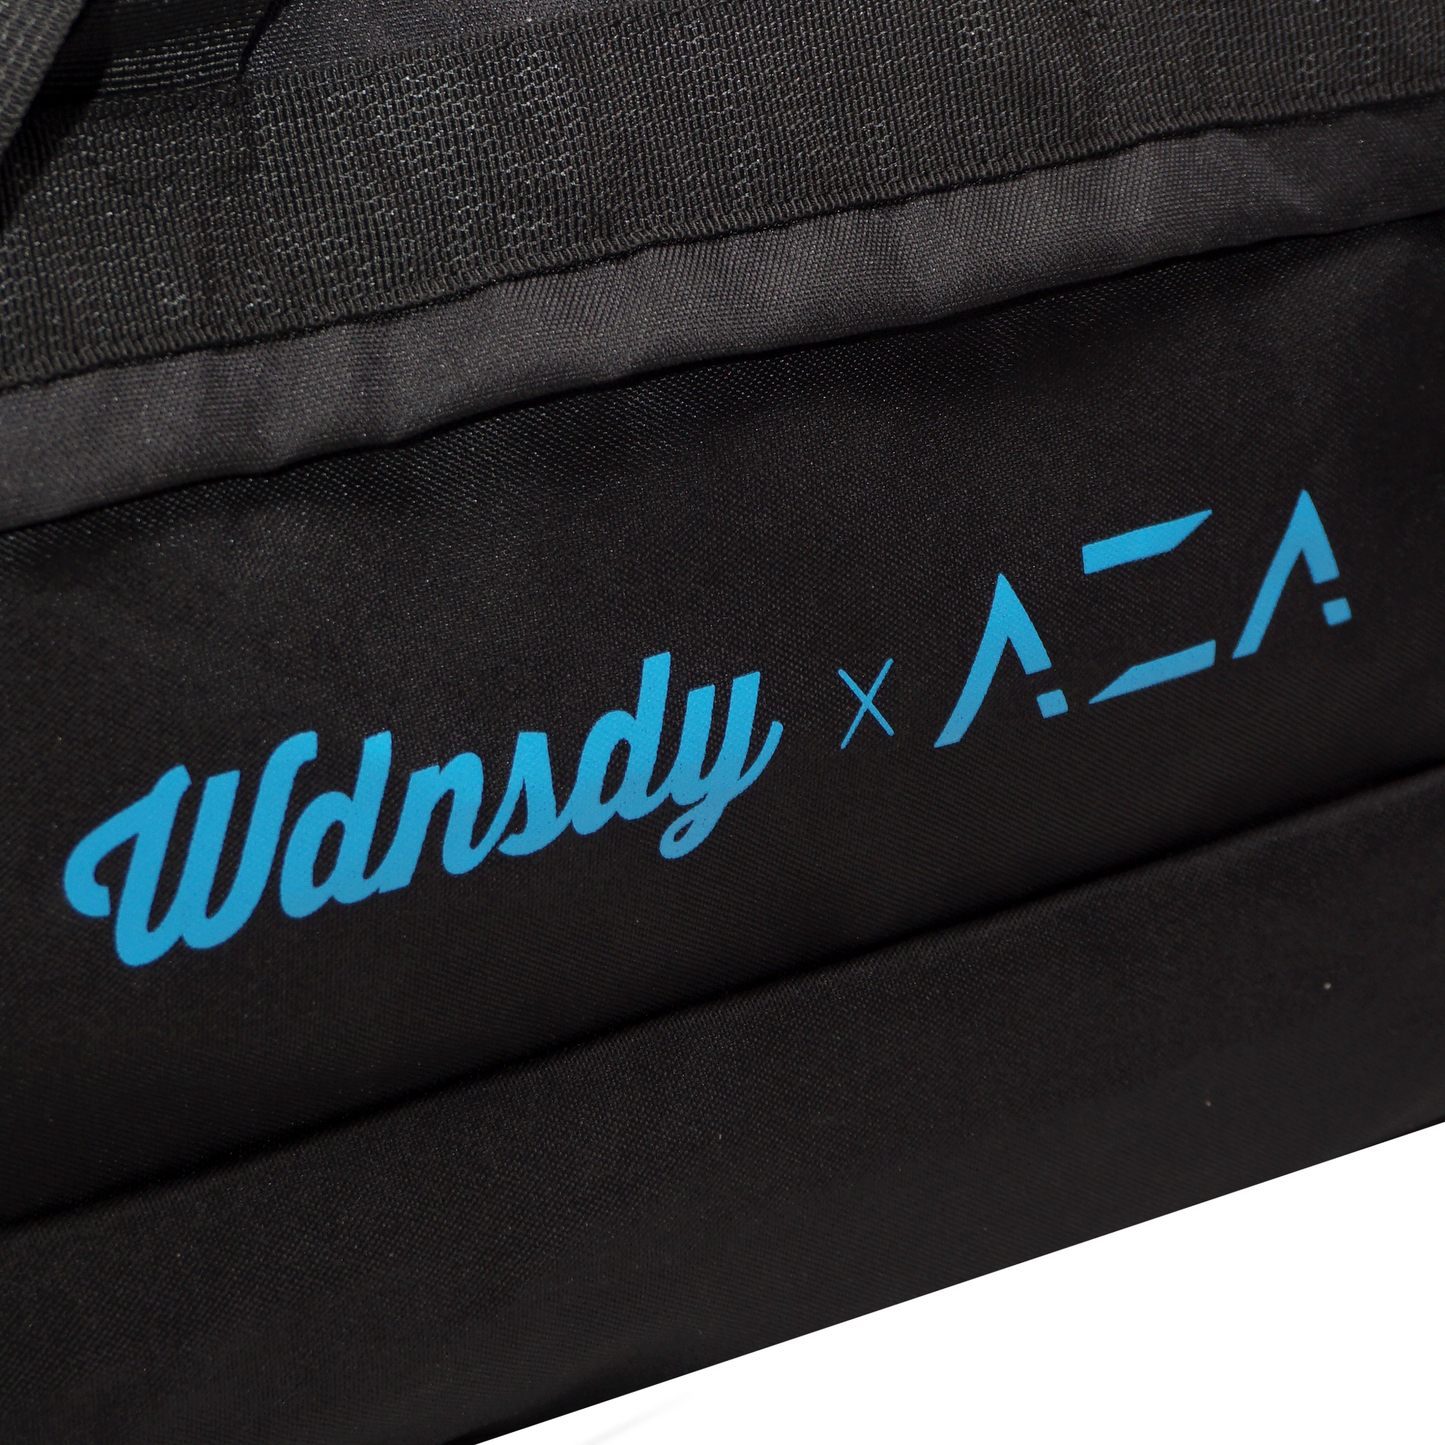 AZA x Wdnsdy Premium Cycling Gym Bag